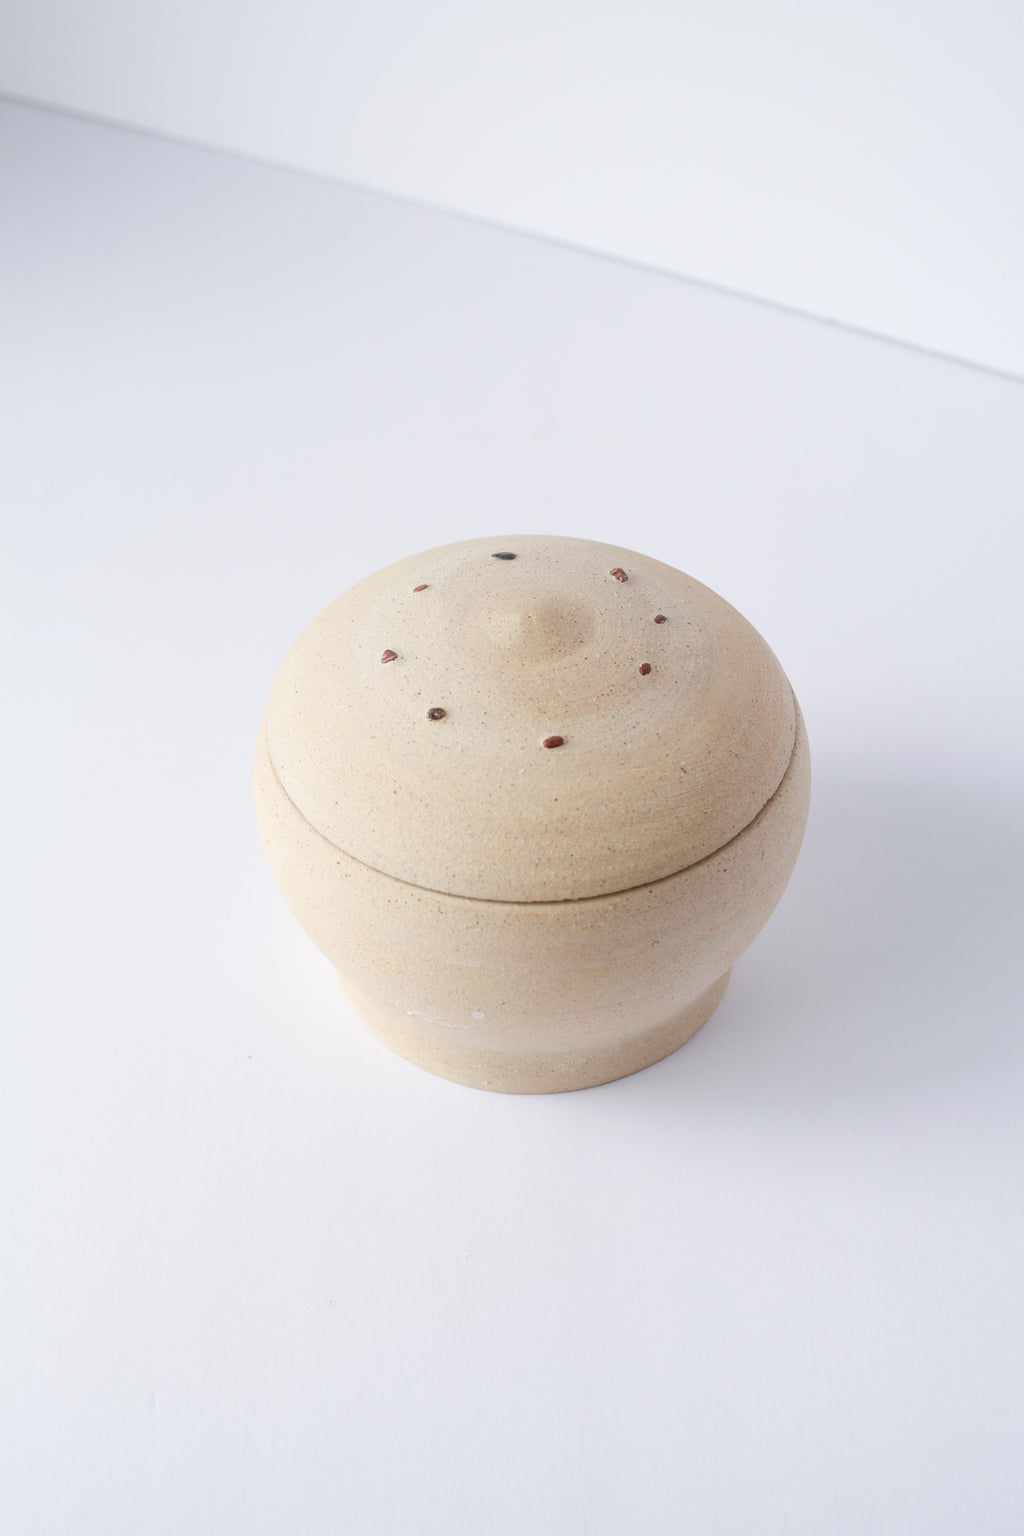 Orb Jar with Inset Pebbles - Sister Ceramics